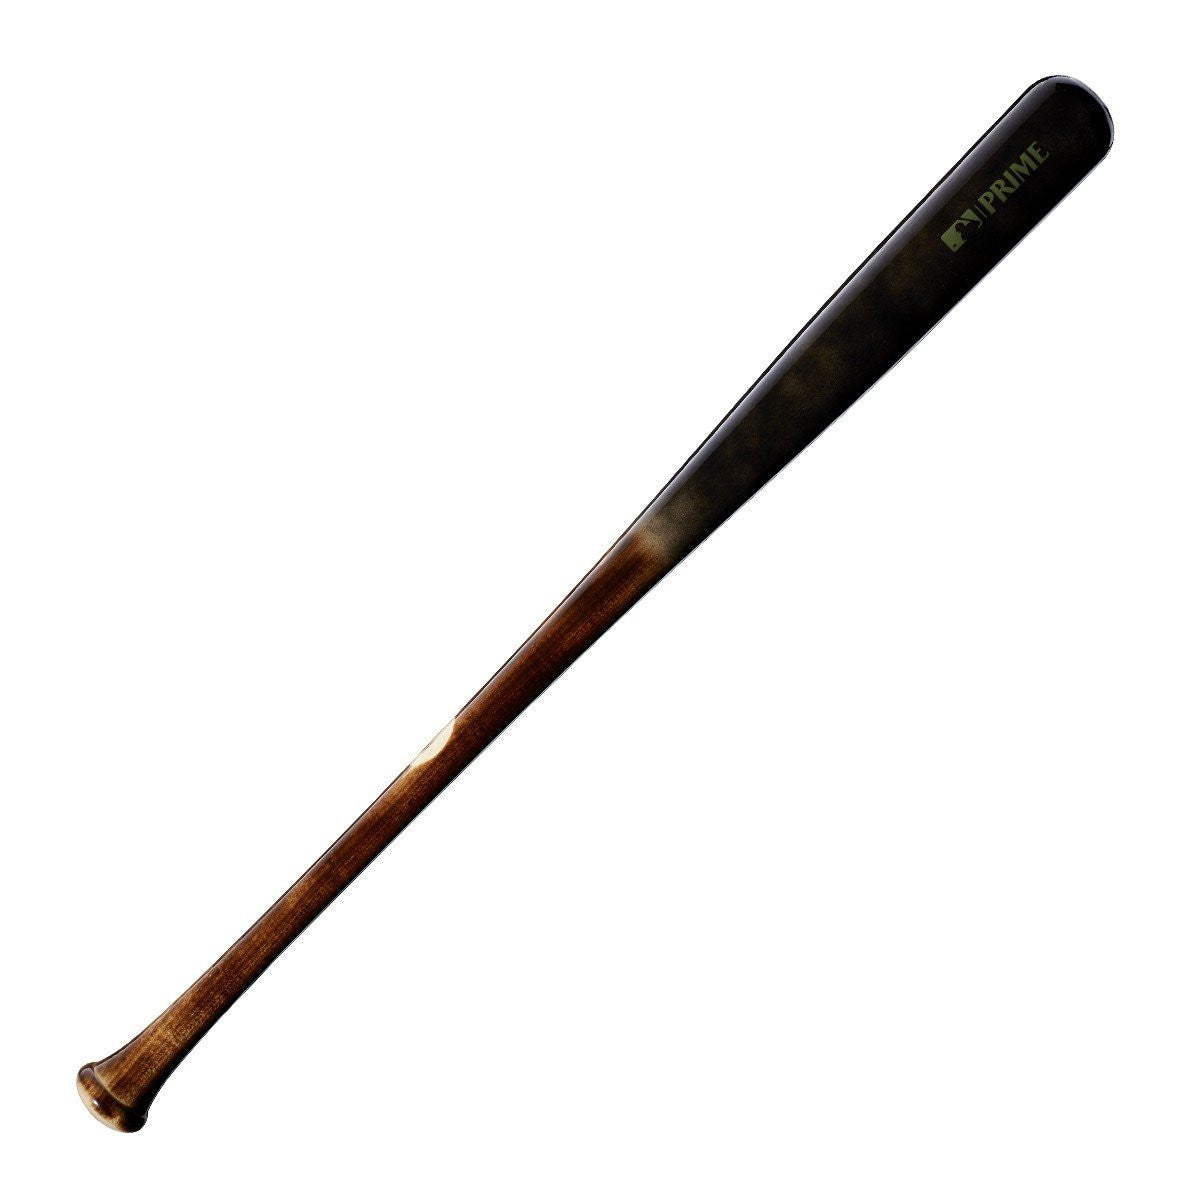 Lousville Slugger MLB Prime Maple C271 High Roller  Baseball Bat Bat Club USA